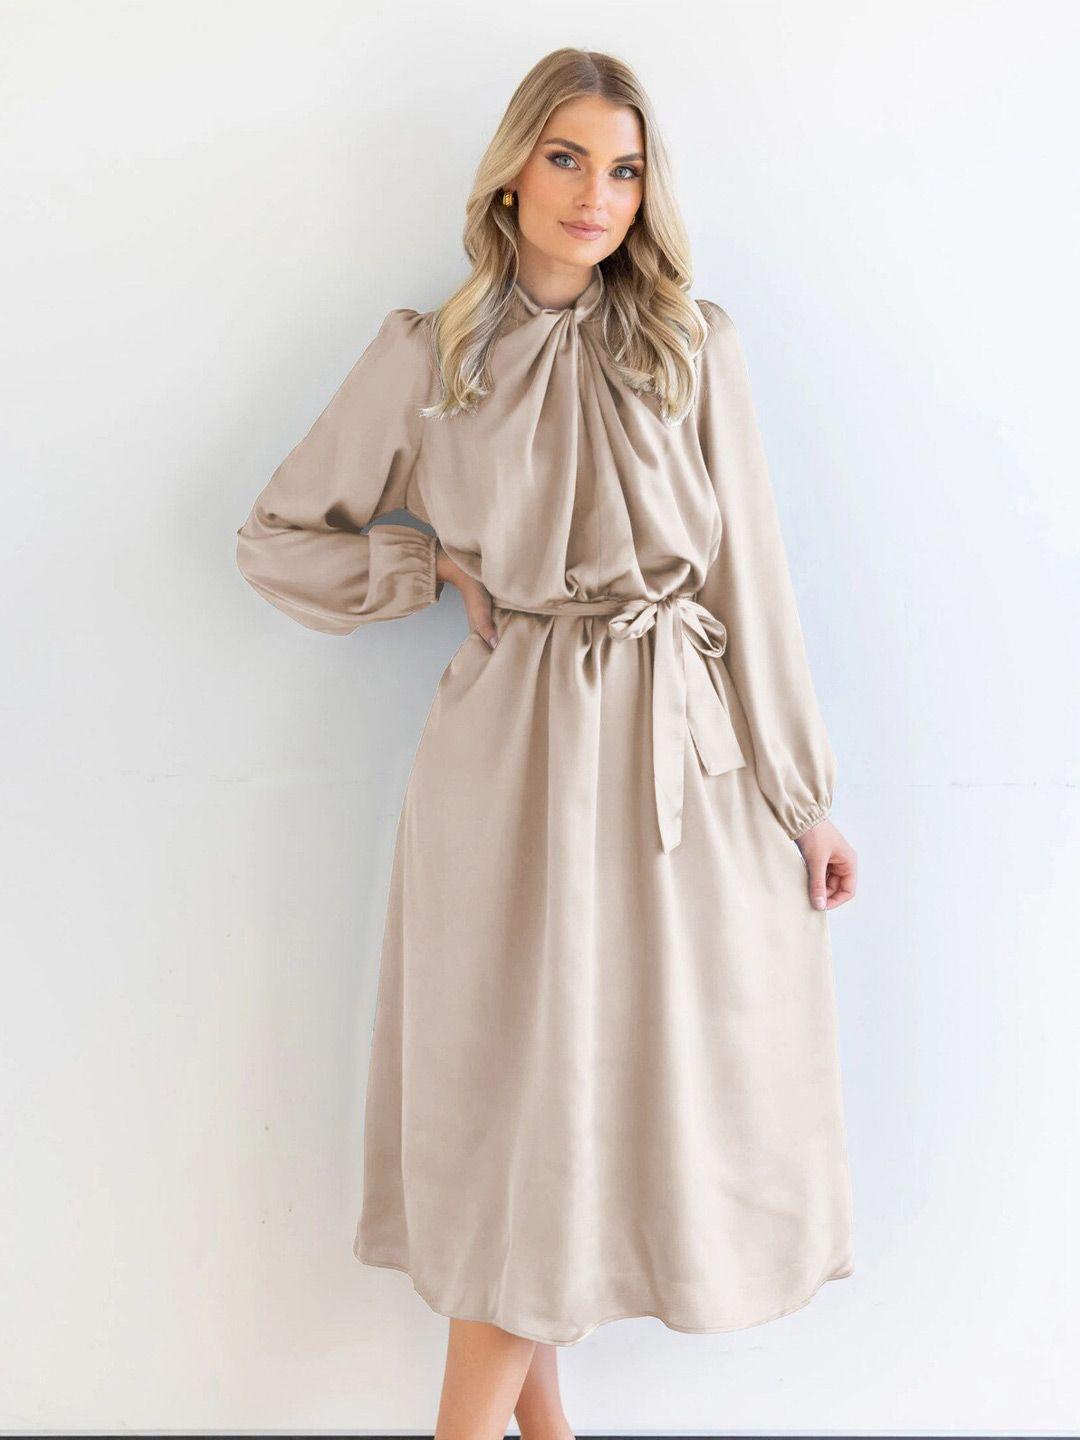 stylecast beige a-line dress